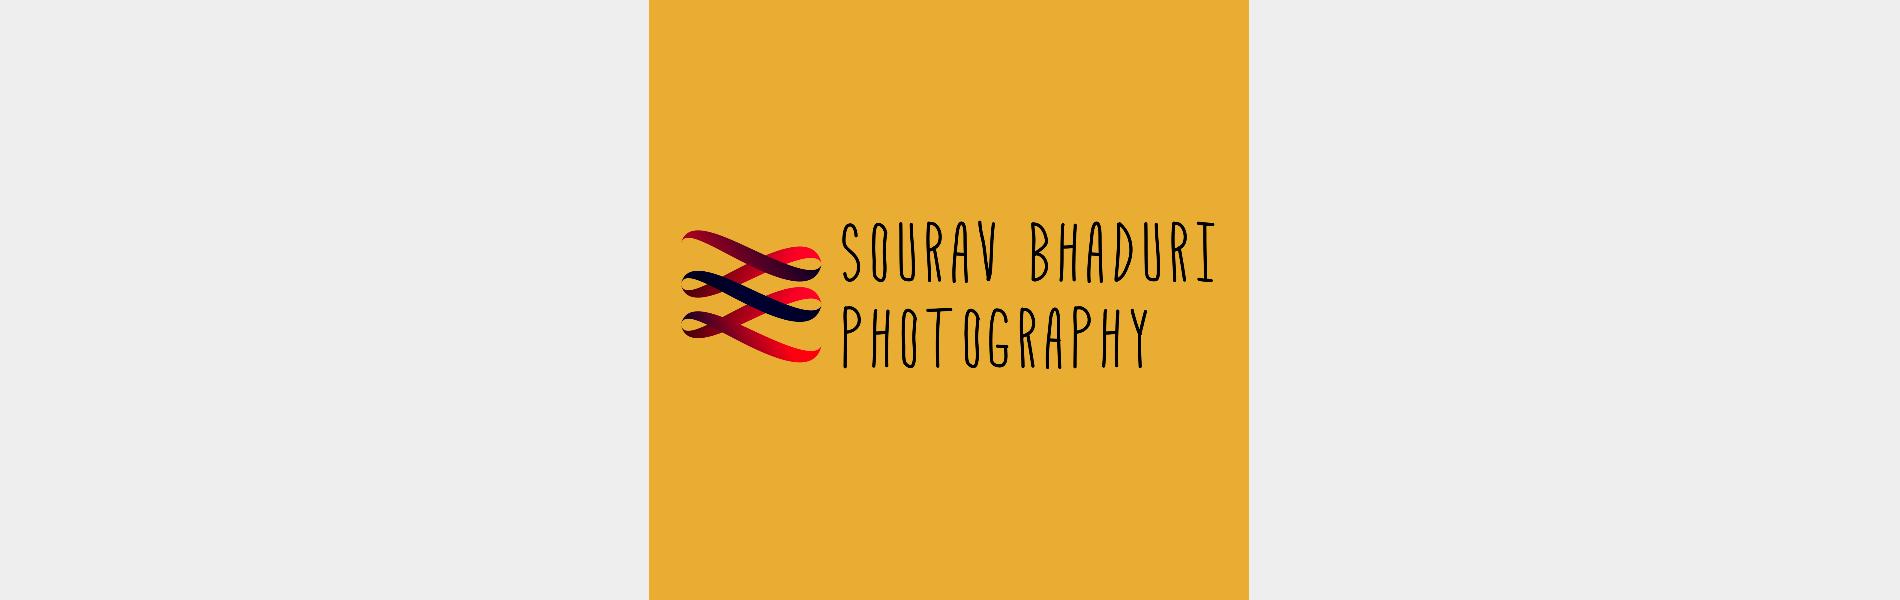 Sourav Bhaduri Photography